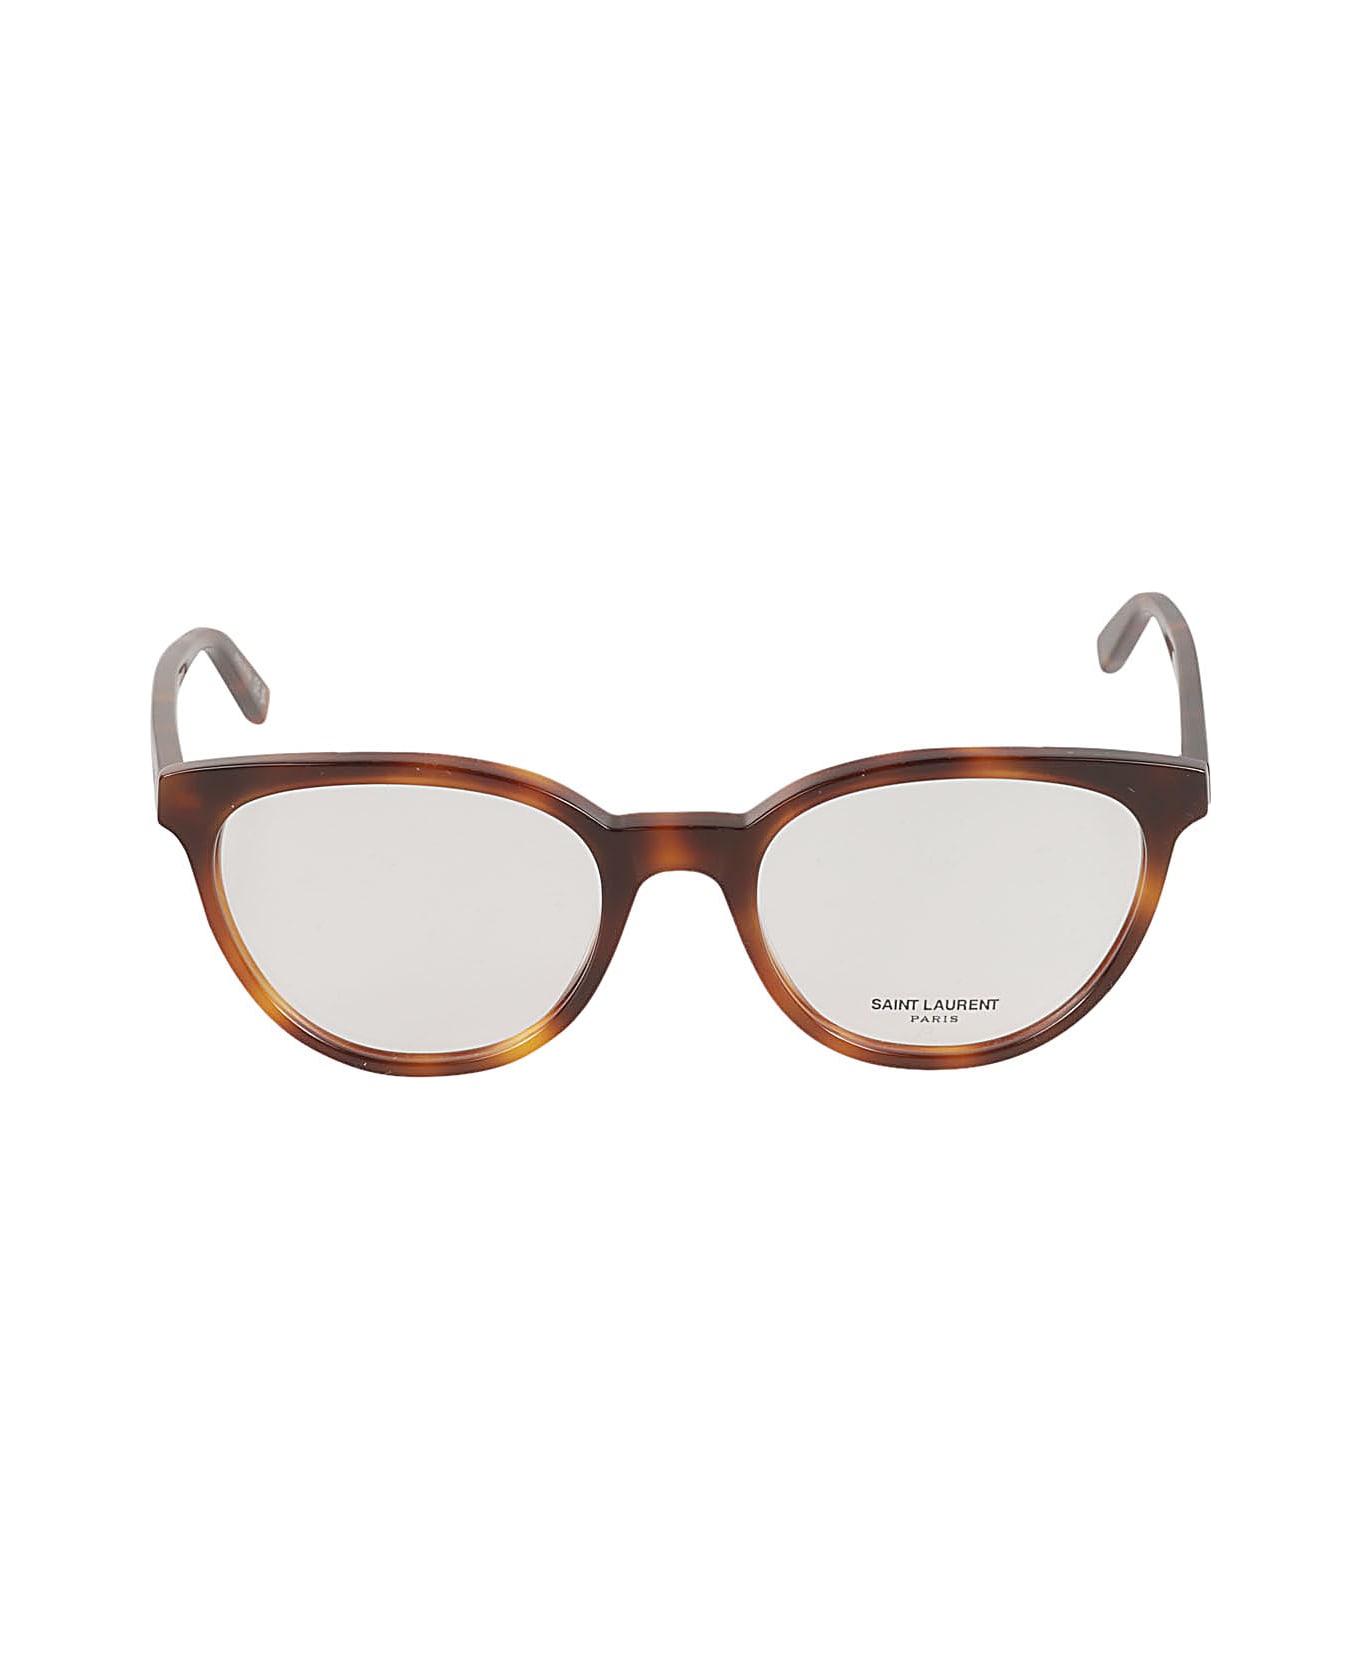 Saint Laurent Eyewear Round Frame Flame Effect Glasses - Havana/Transparent